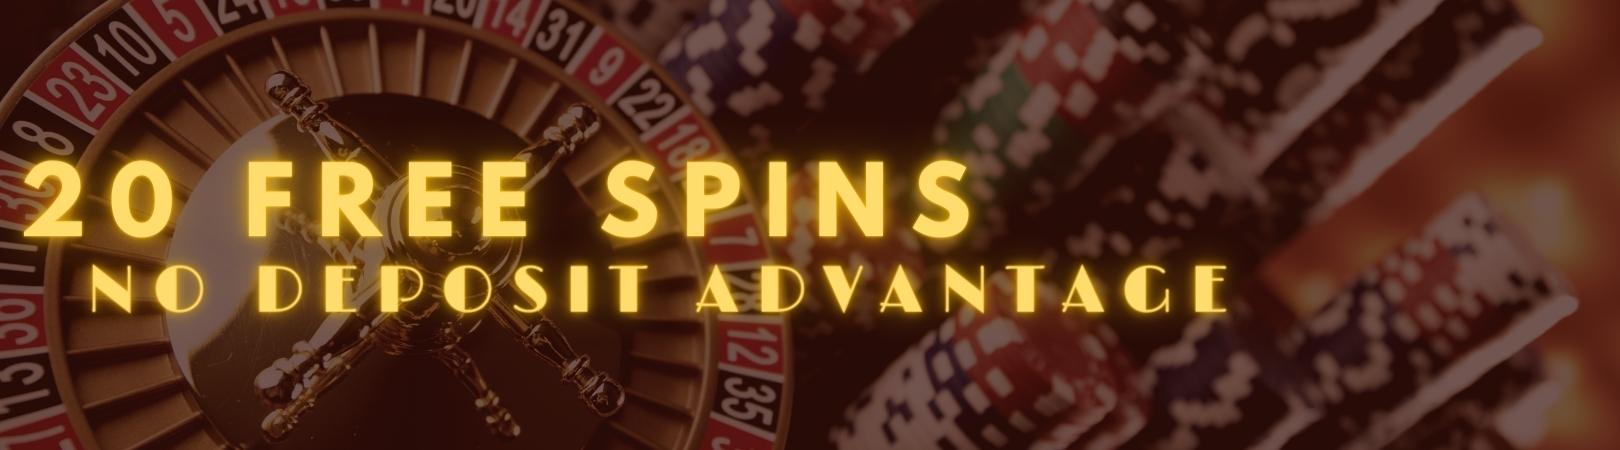 20 Free spins no deposit advantages img